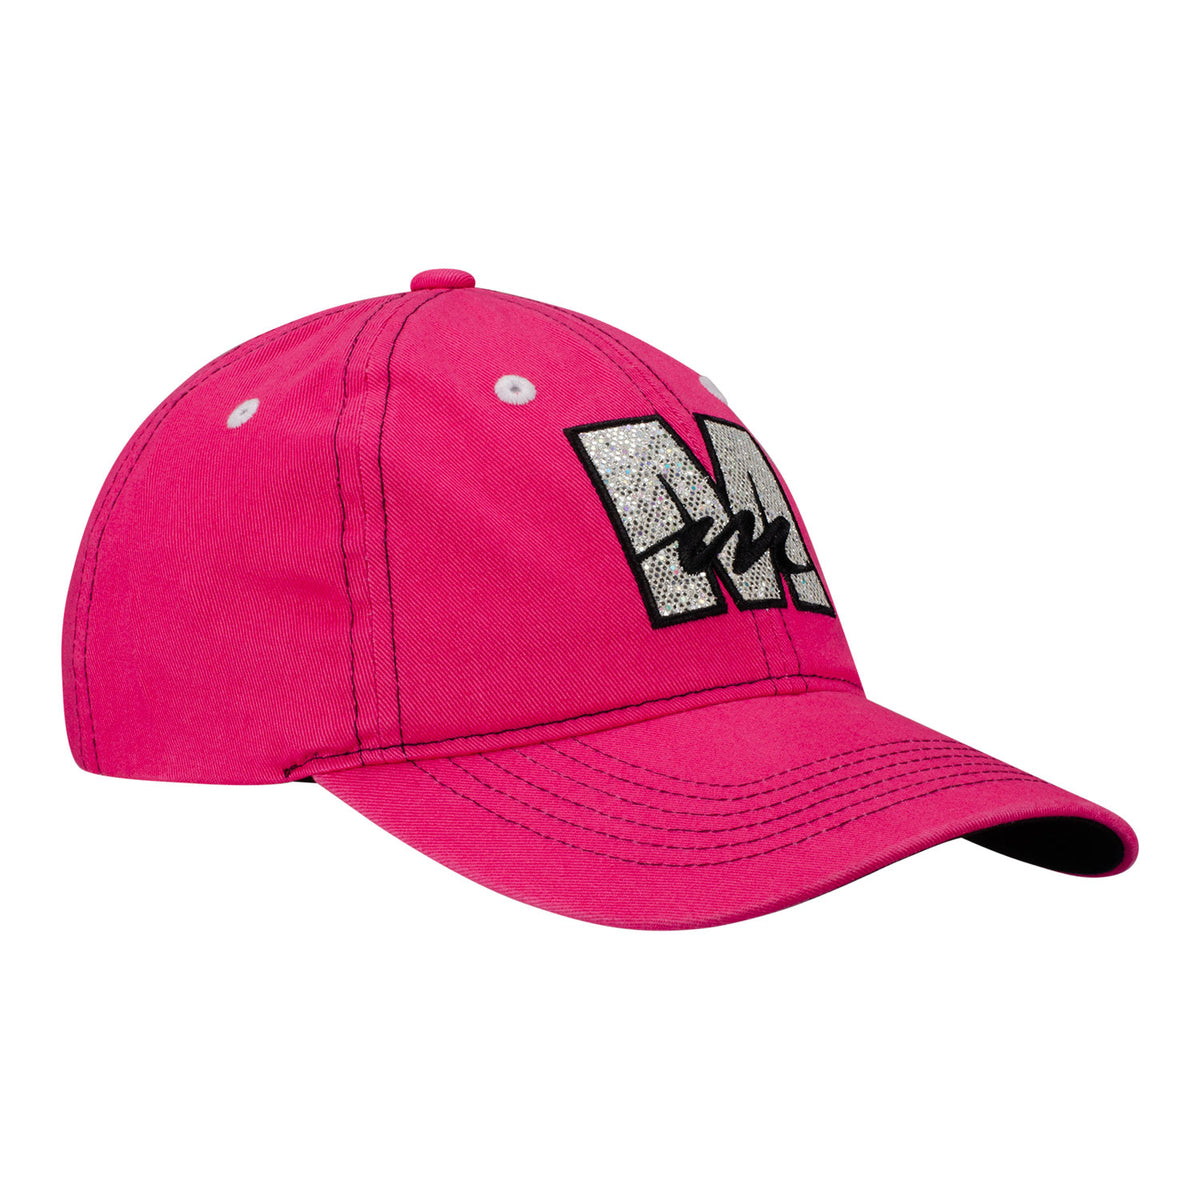 Mecum Auctions Ladies Pink Glitter Hat - Front View